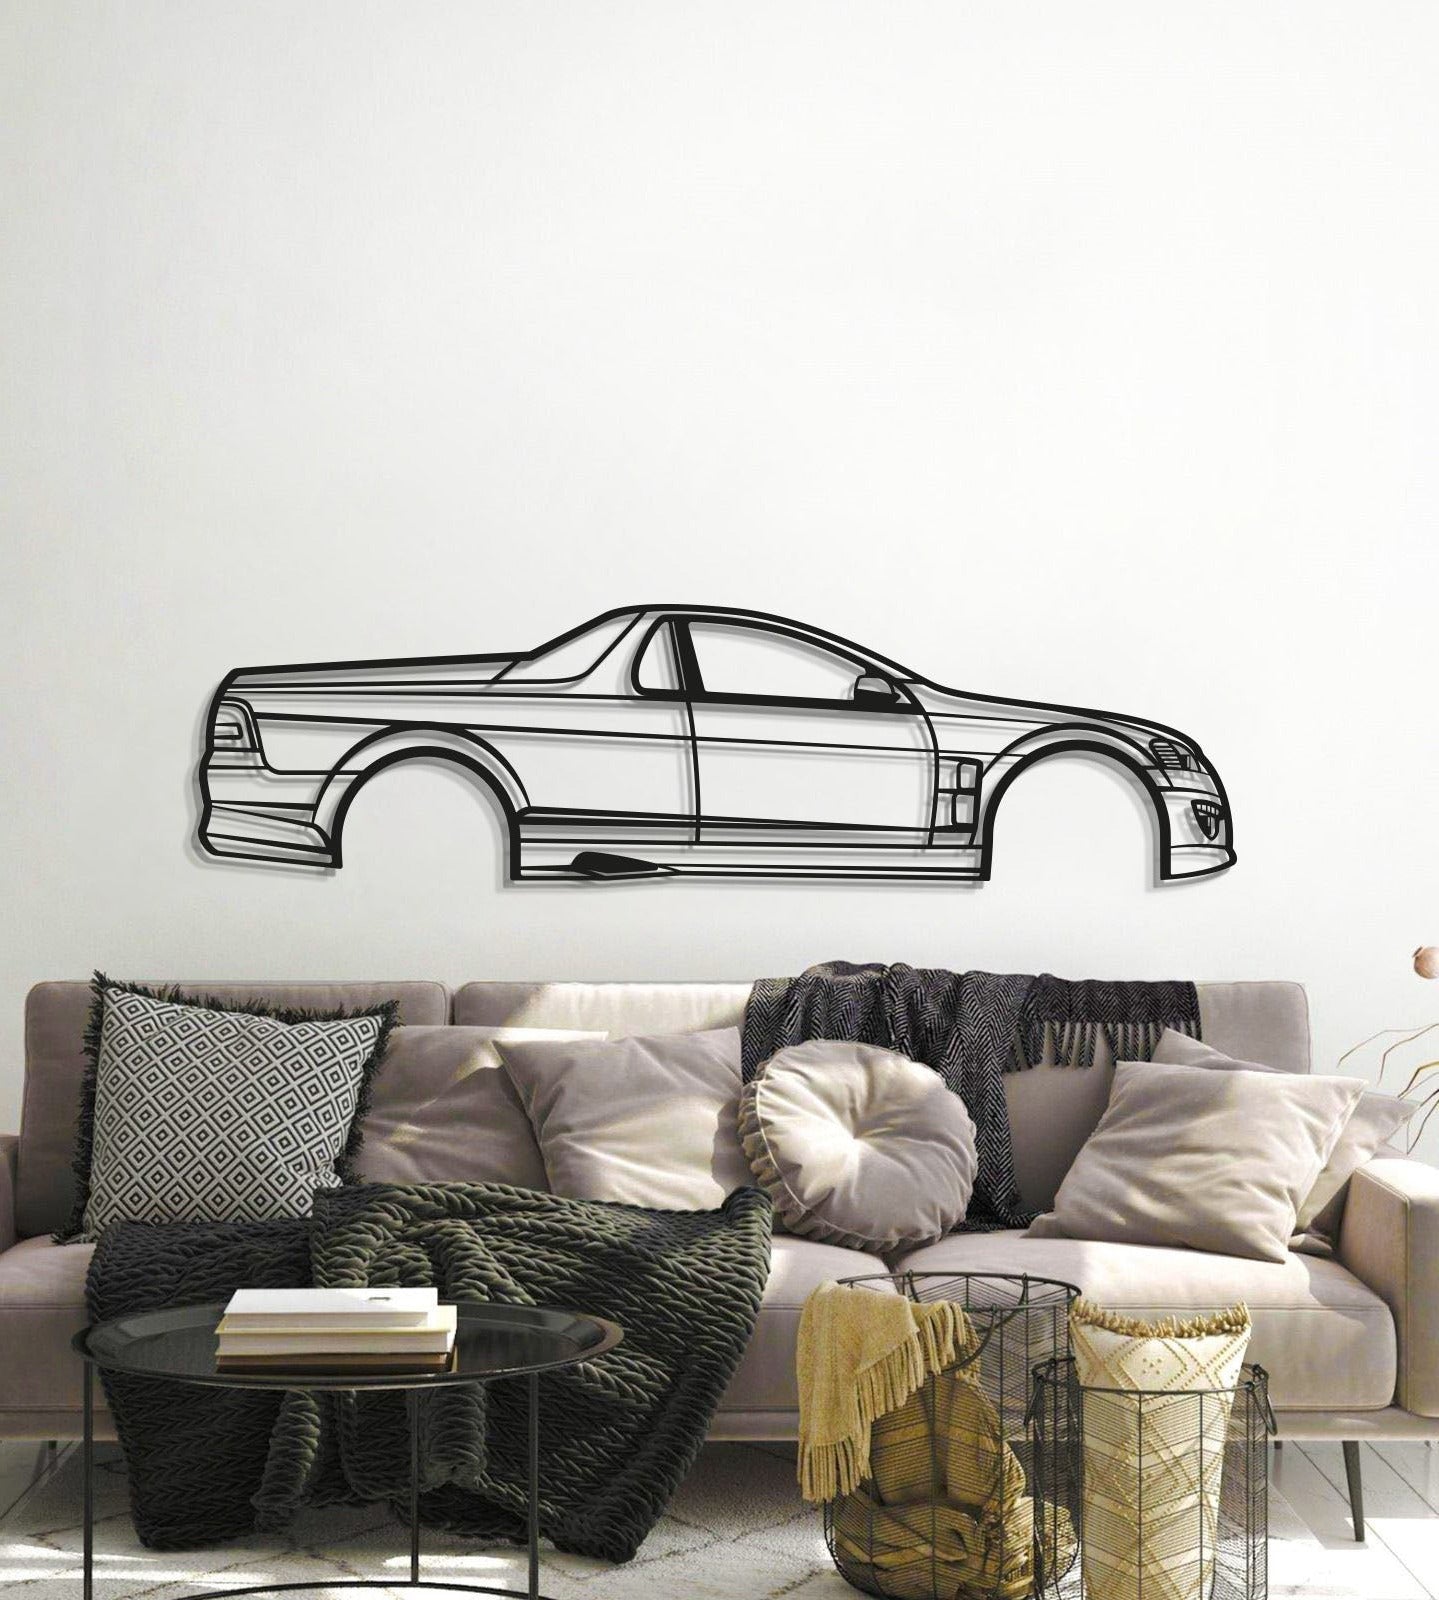 2009 HSV Maloo Metal Car Wall Art - MT0391